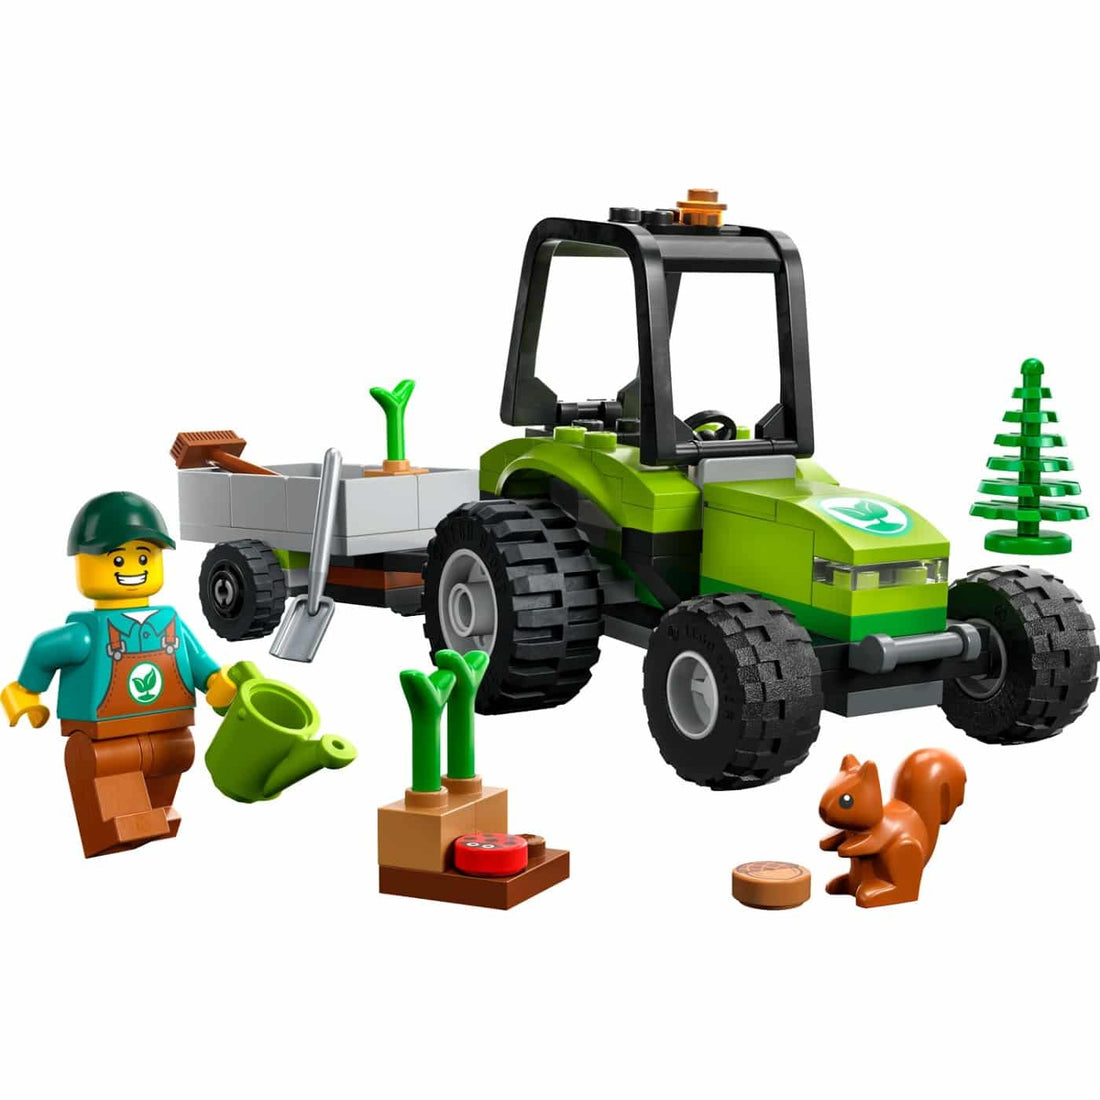 60390 Lego City Park Tractor